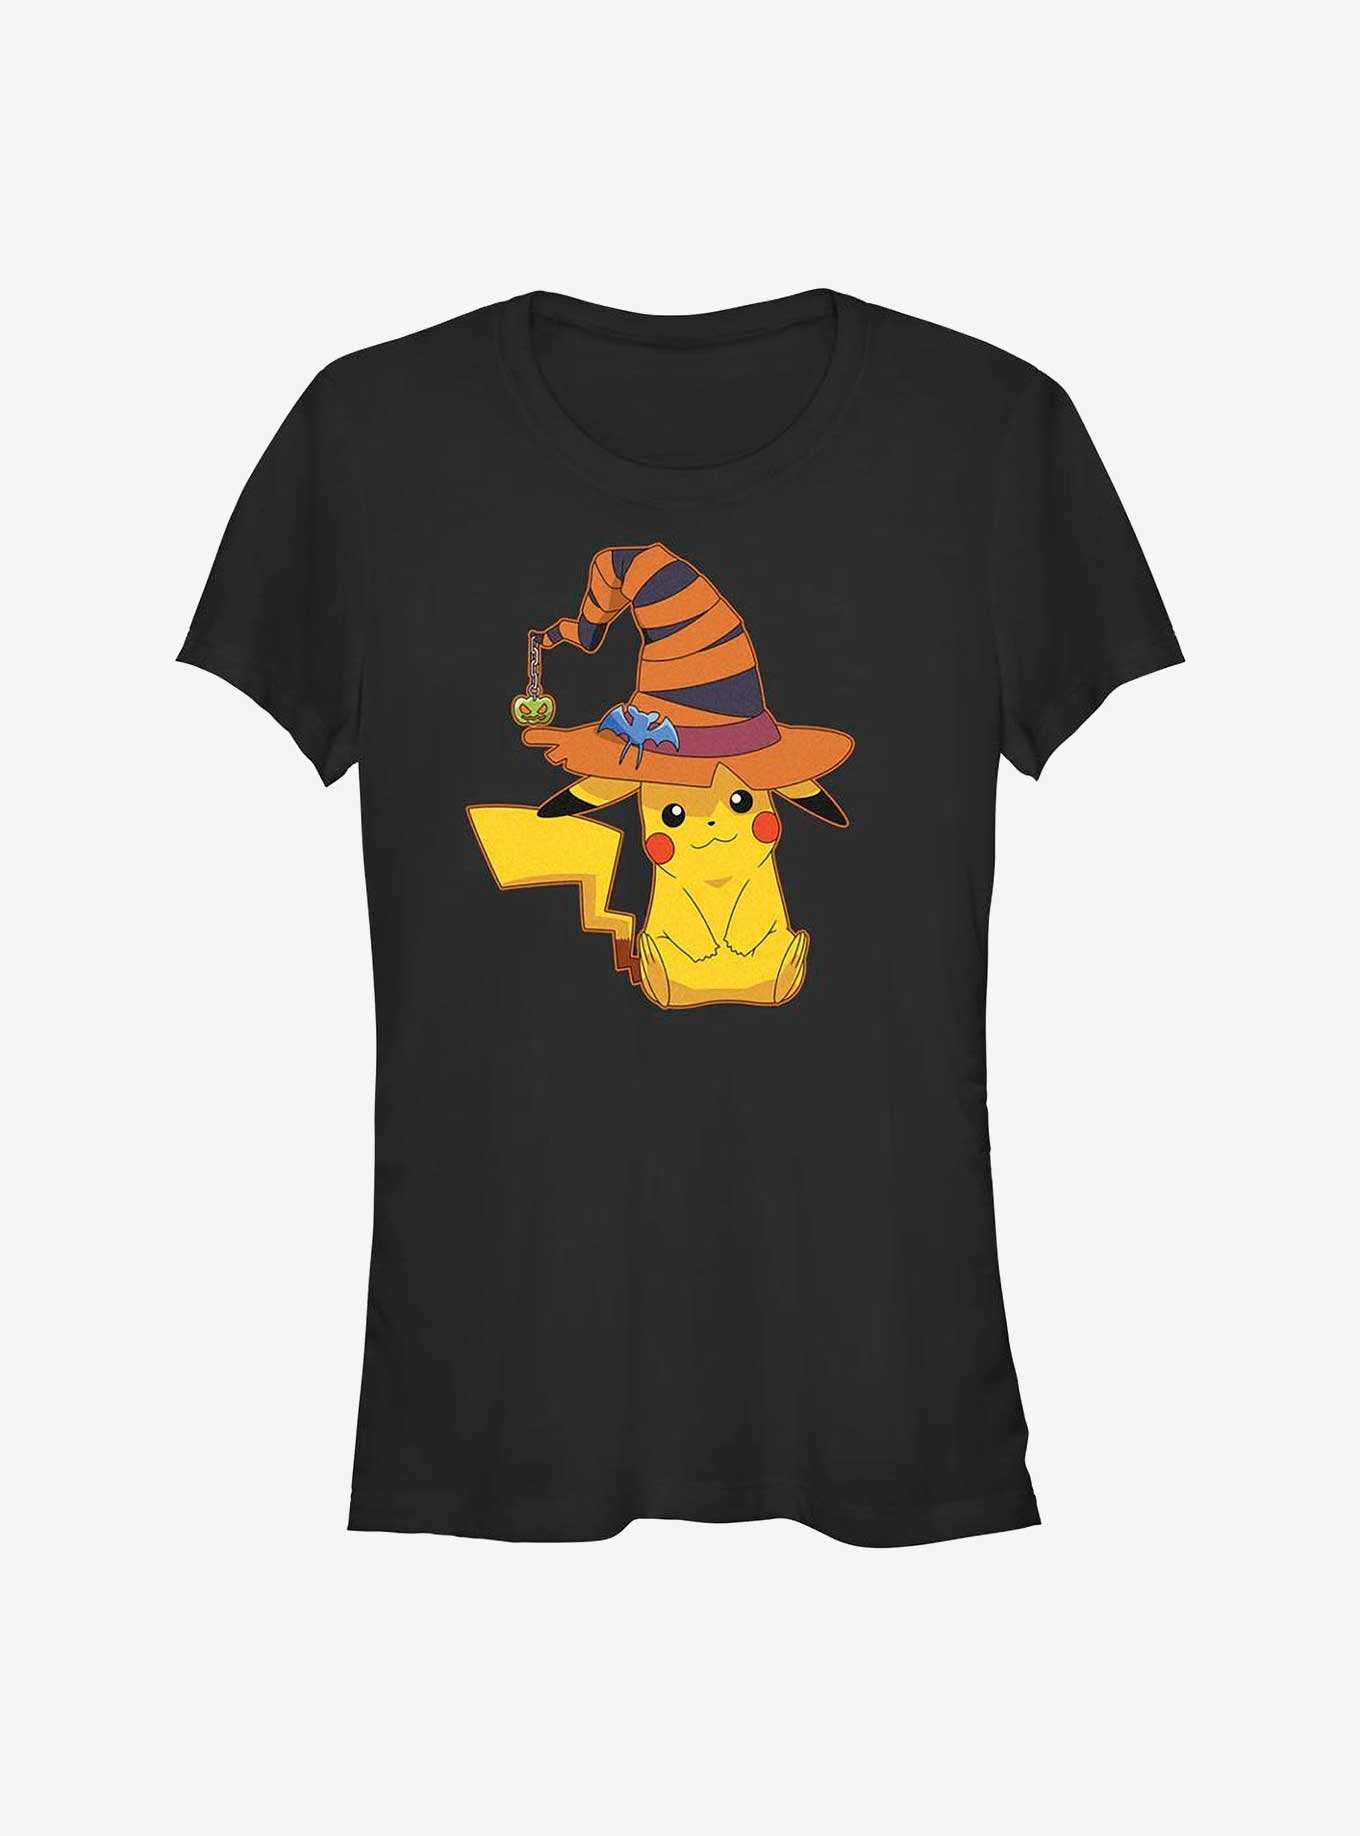 Pokemon Pikachu Witch Girls T-Shirt, , hi-res